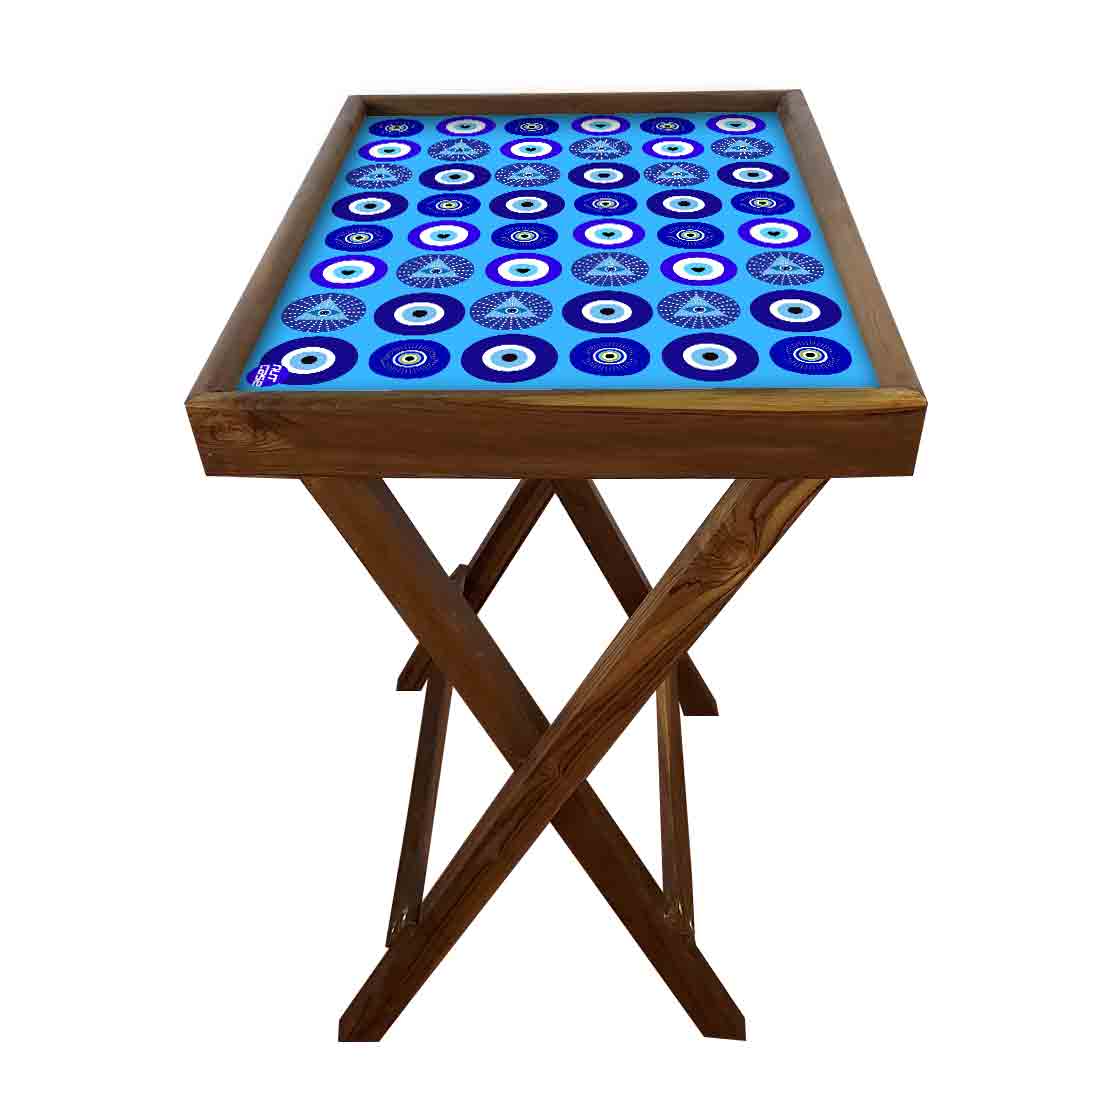 Wooden TV Tables for Eating Breakfast Serving Table - Evil Eye Protector Nutcase